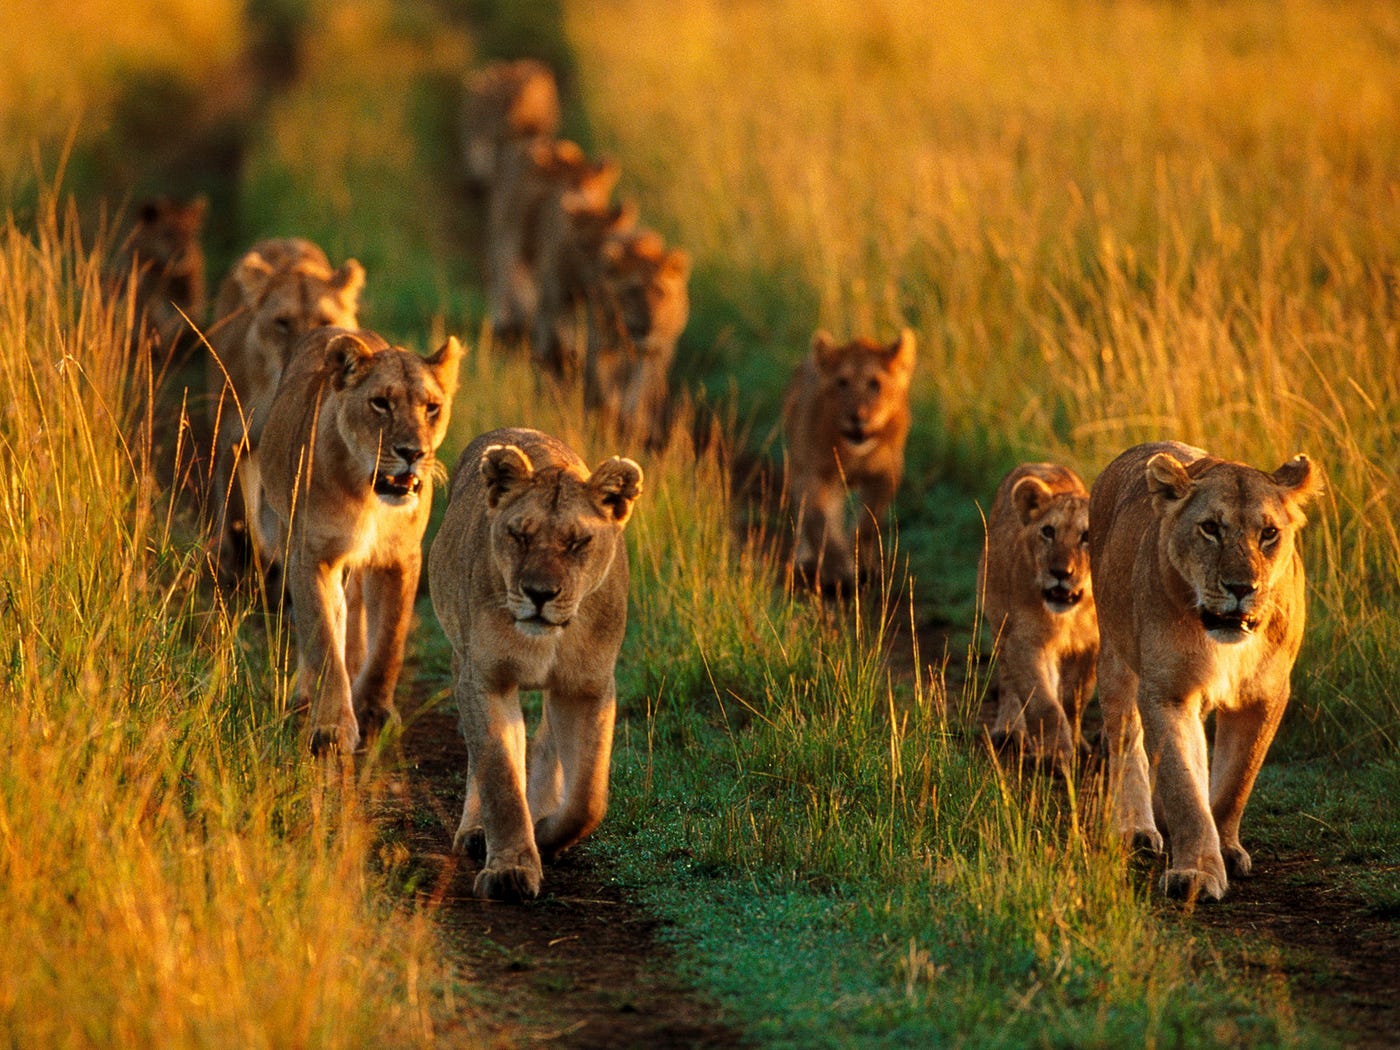 The Lion King: Disney's lion conservation project